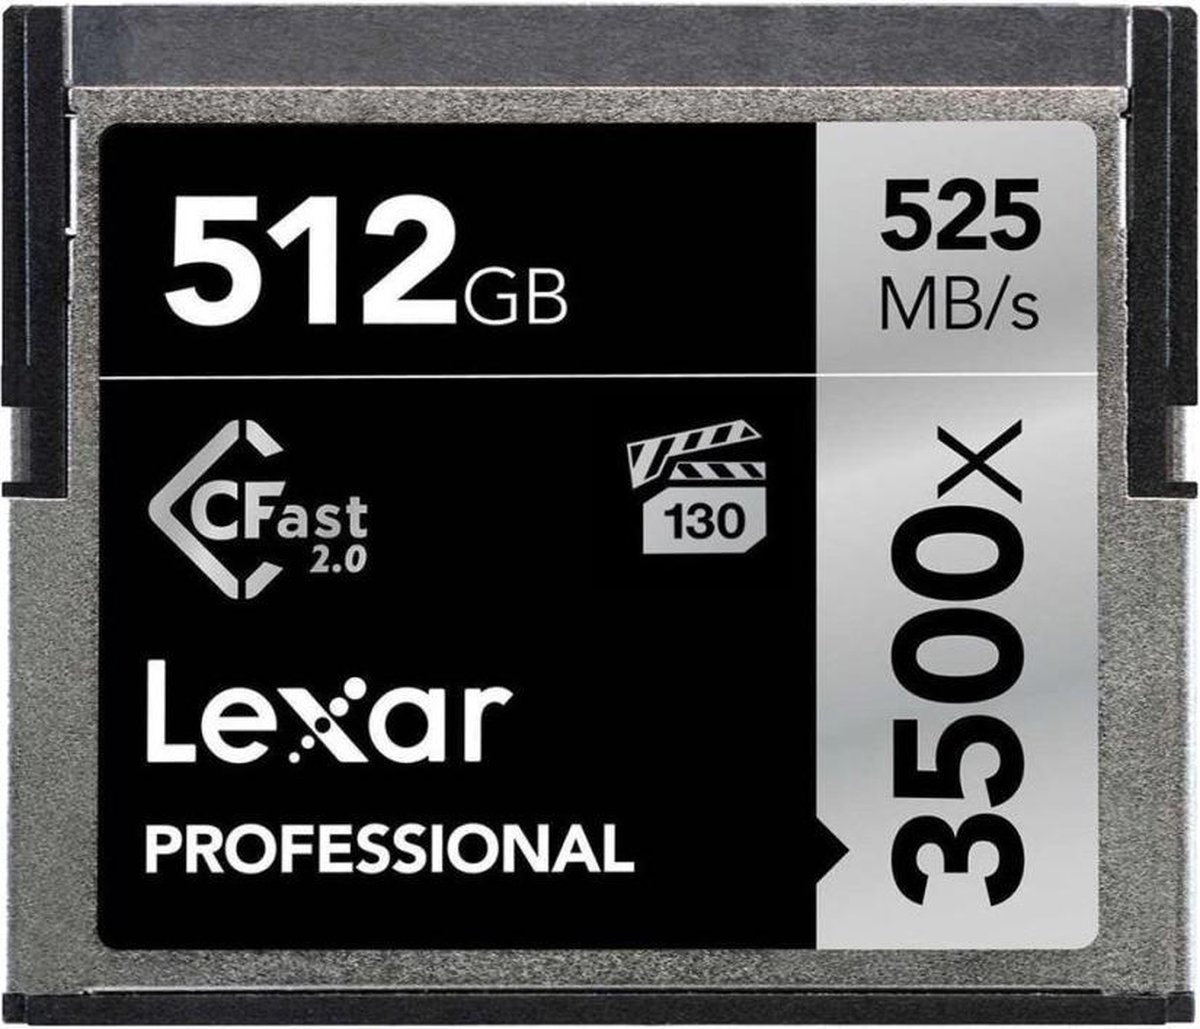 Lexar CFast 2.0 Professional 3500x 512GB